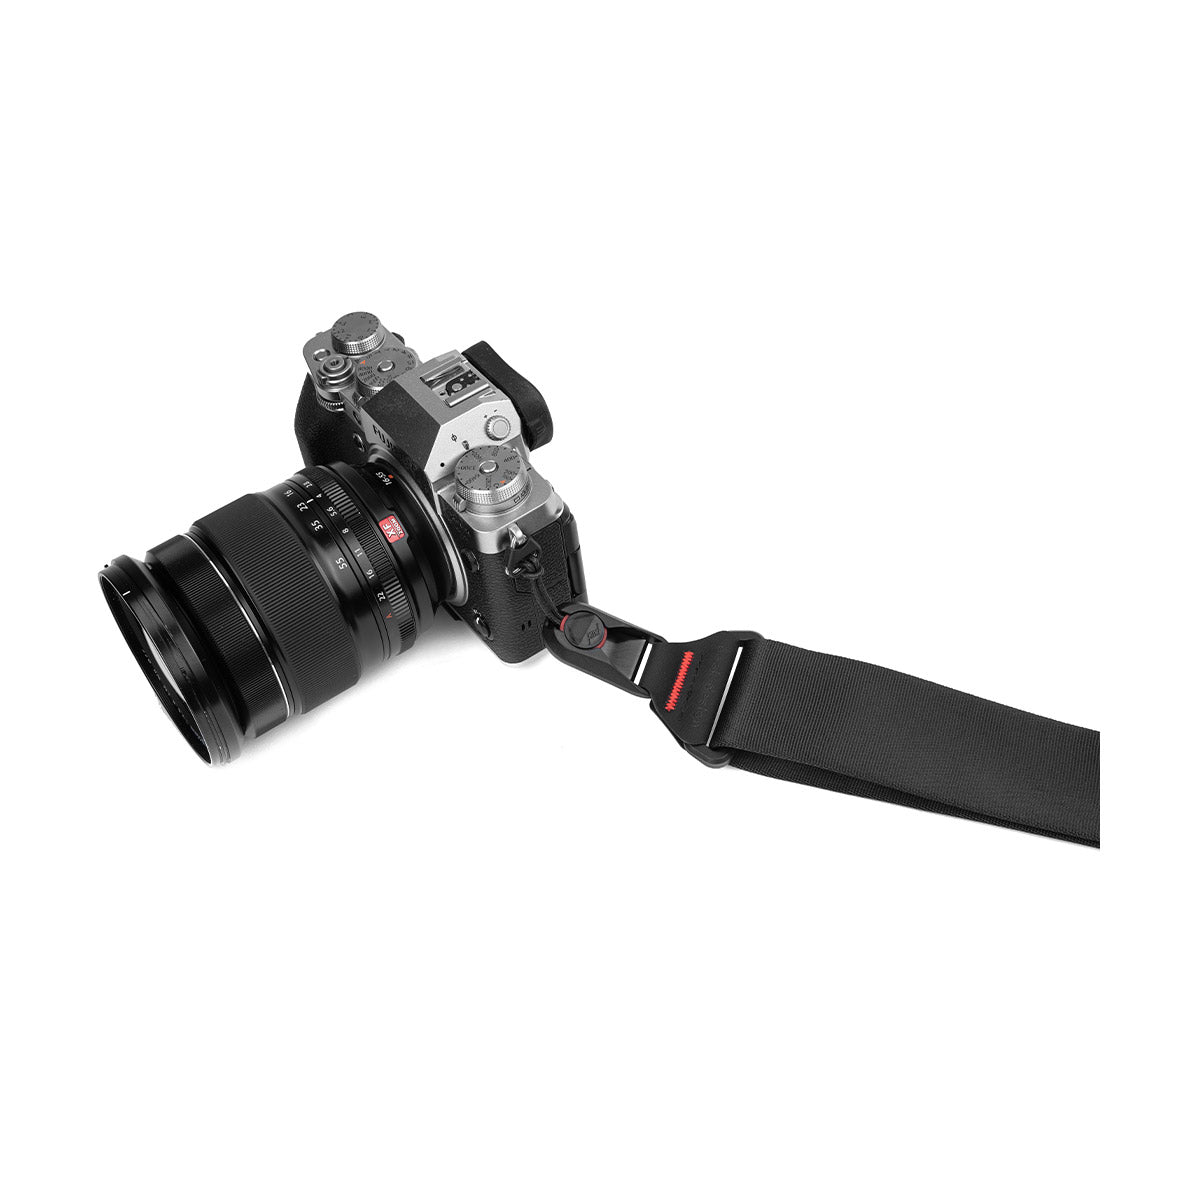  Peak Design Slide Lite Camera Strap Black (SLL-BK-3